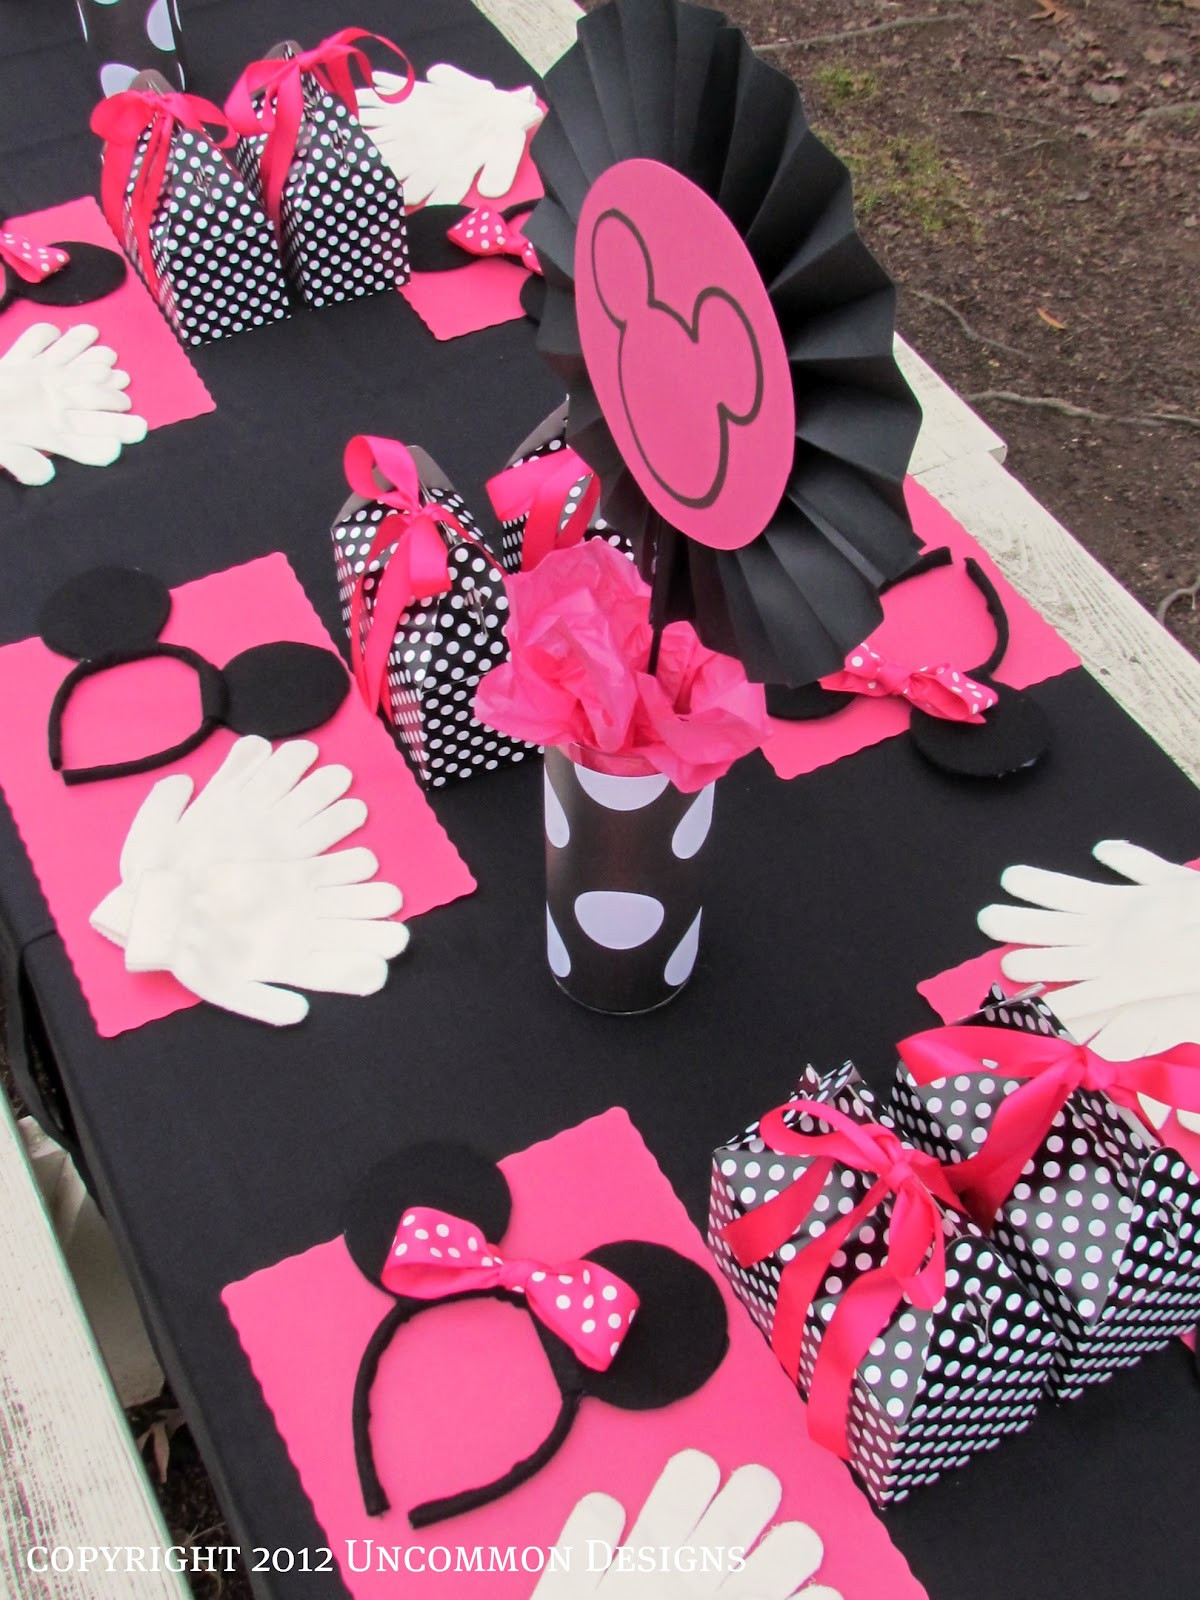 Best ideas about Minnie Mouse Birthday Party Decorations
. Save or Pin A Minnie Mouse Birthday Party Un mon Designs Now.